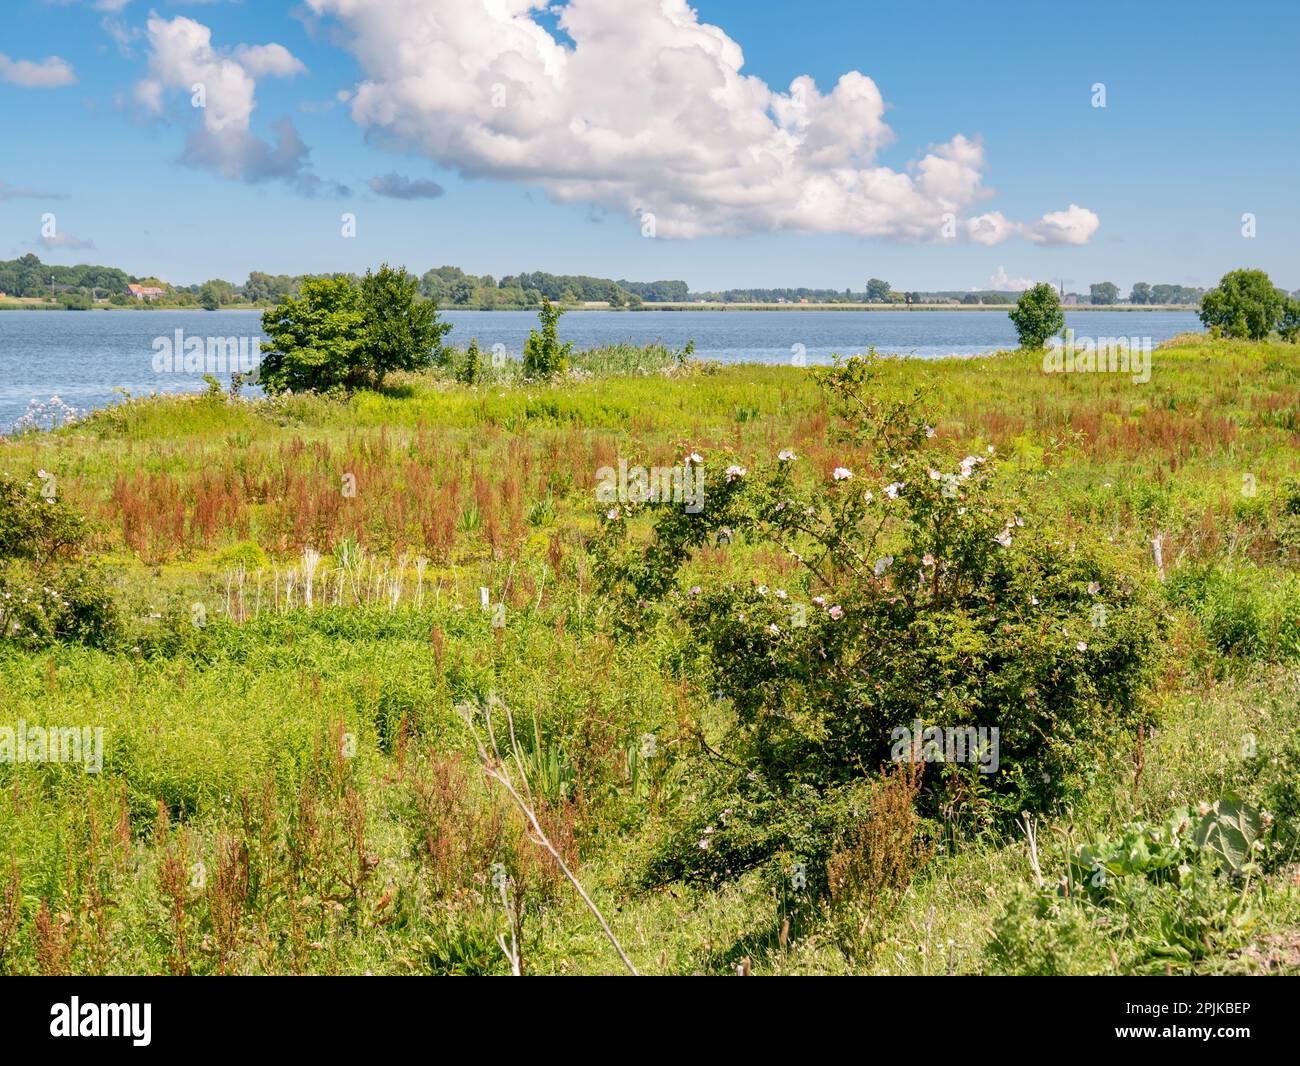 Wetland Blanke Slikken with marshes on Tiengemeten island in Haringvliet estuary, South Holland, Netherlands Stock Photo